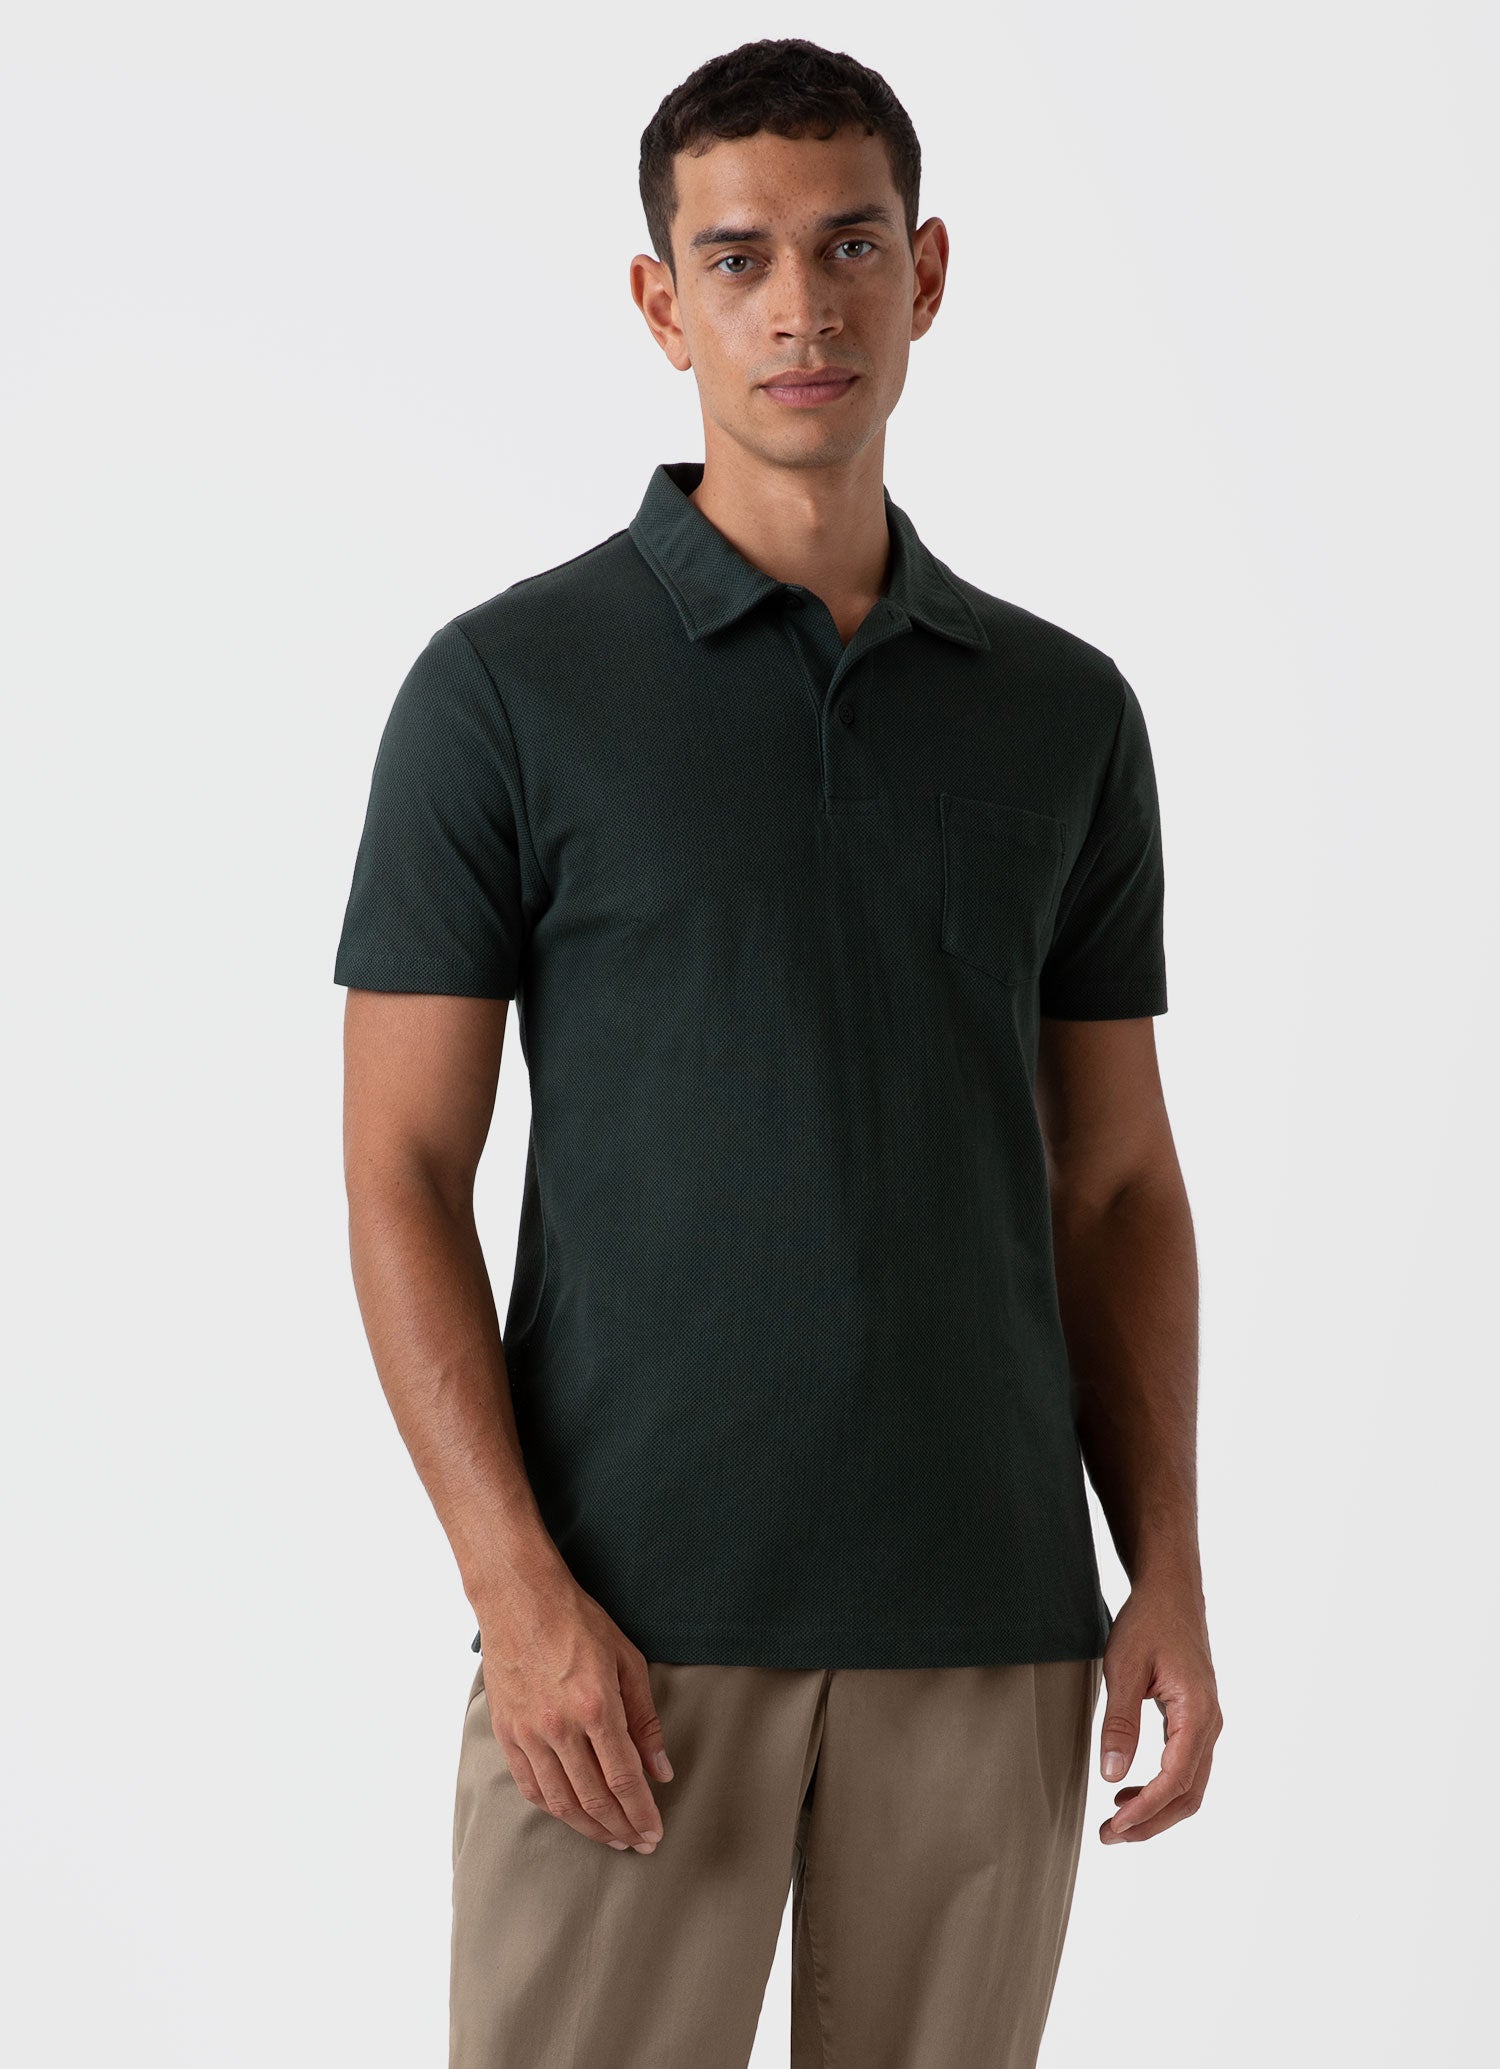 Men's Riviera Polo Shirt in Seaweed